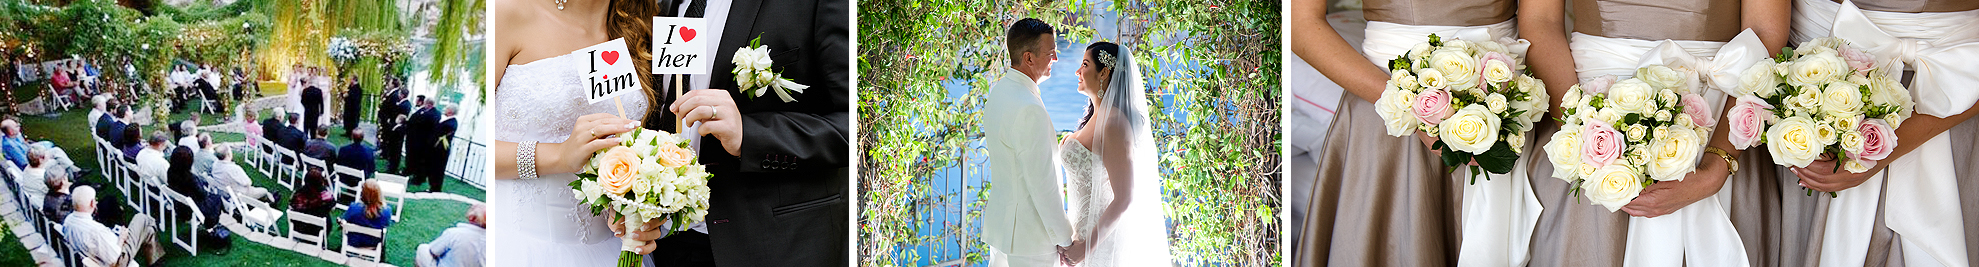 Lakefront Gazebo Las Vegas Wedding Packages for Outdoor and Indoor Ceremonies